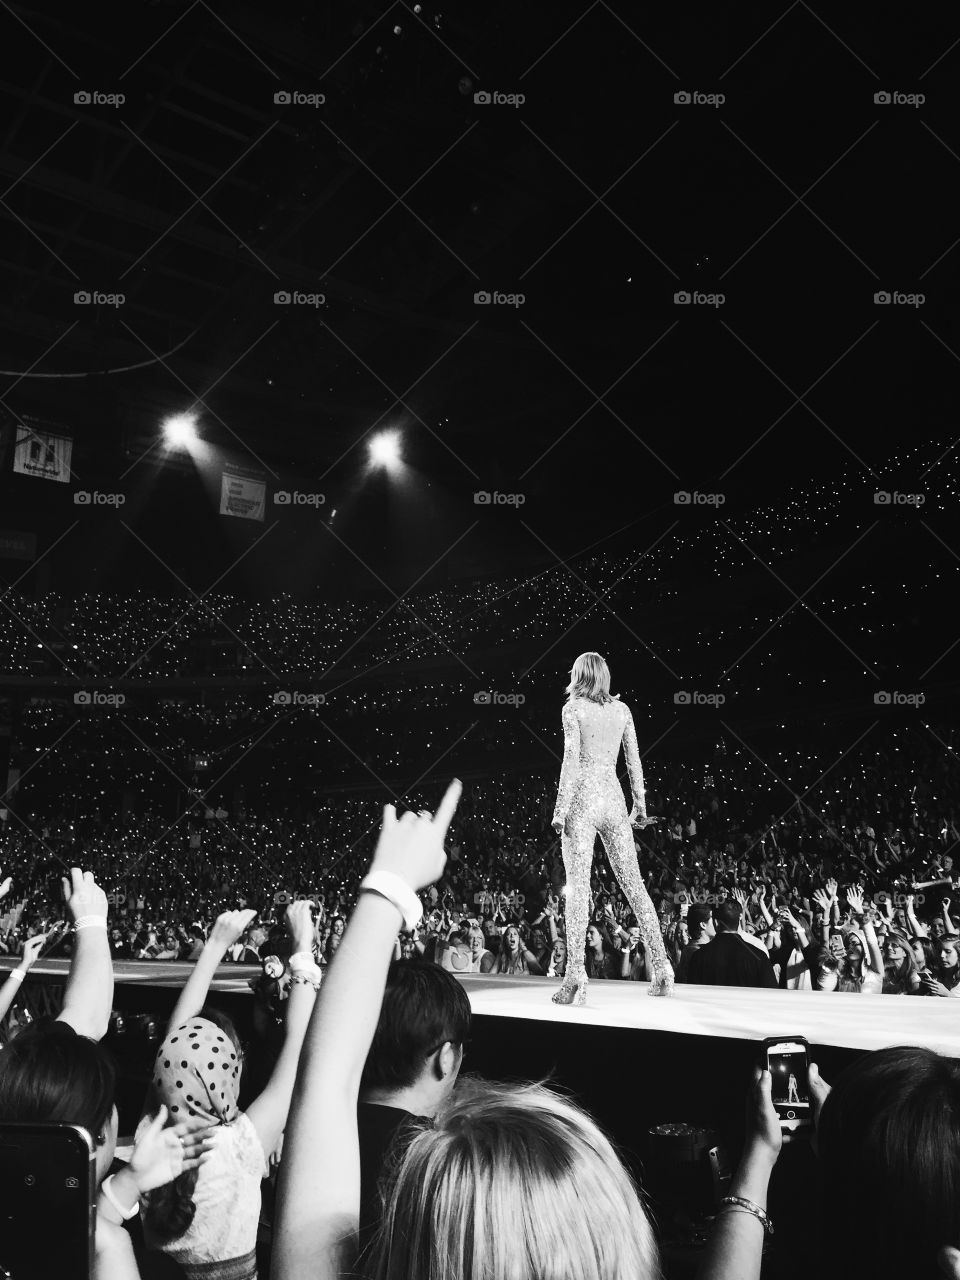 Taylor Swift
1989 Tour